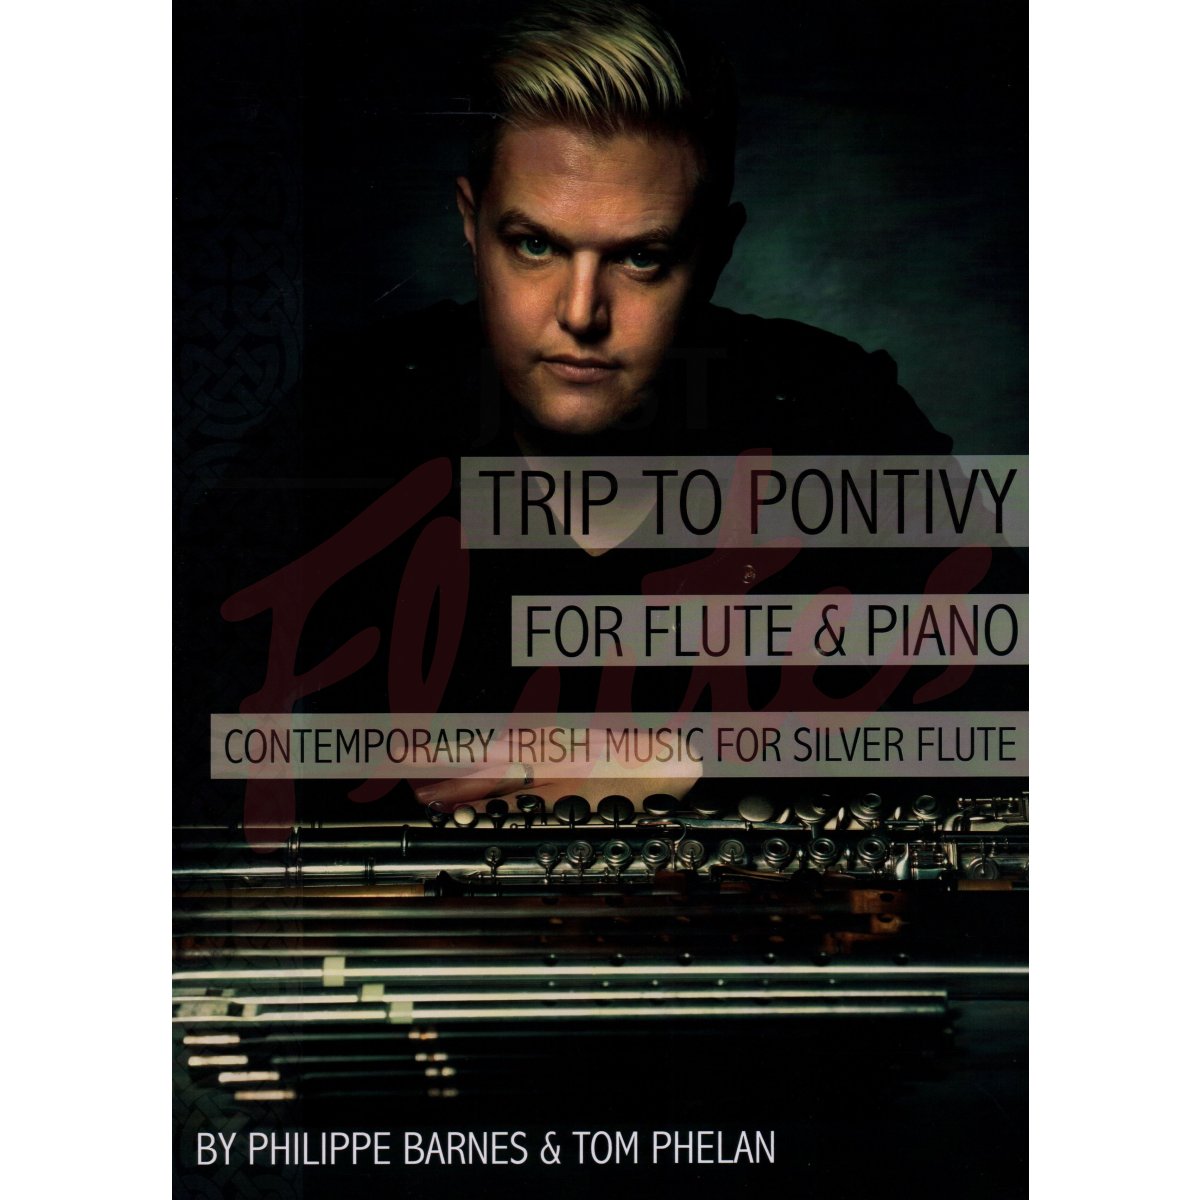 Trip to Pontivy for Flute and Piano